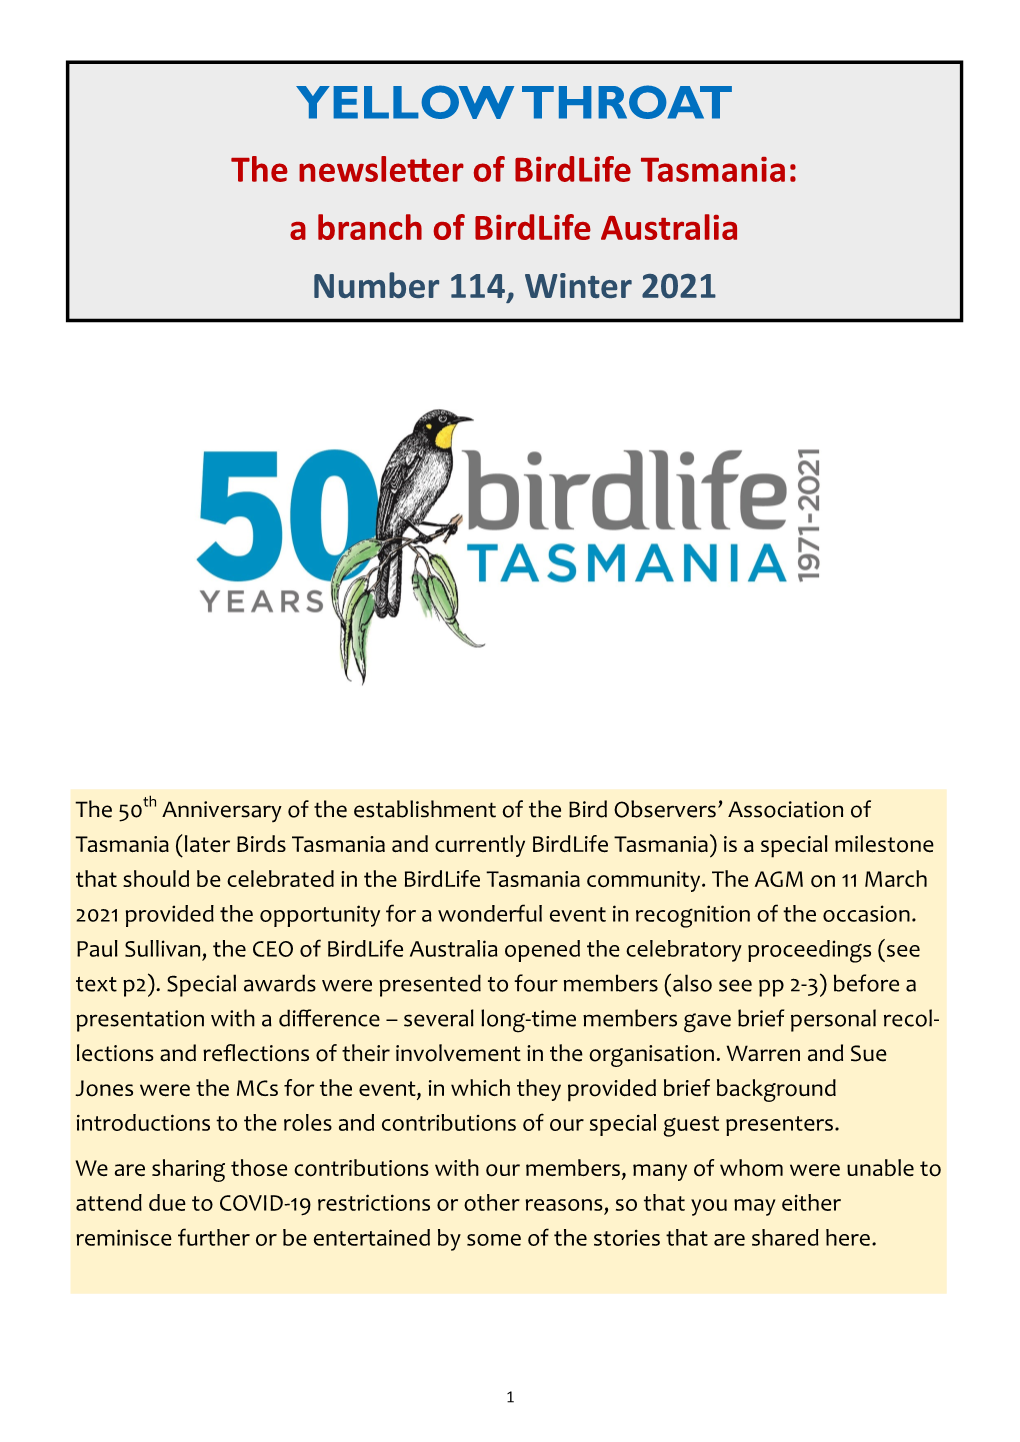 YELLOW THROAT the Newsletter of Birdlife Tasmania: a Branch of Birdlife Australia Number 114, Winter 2021